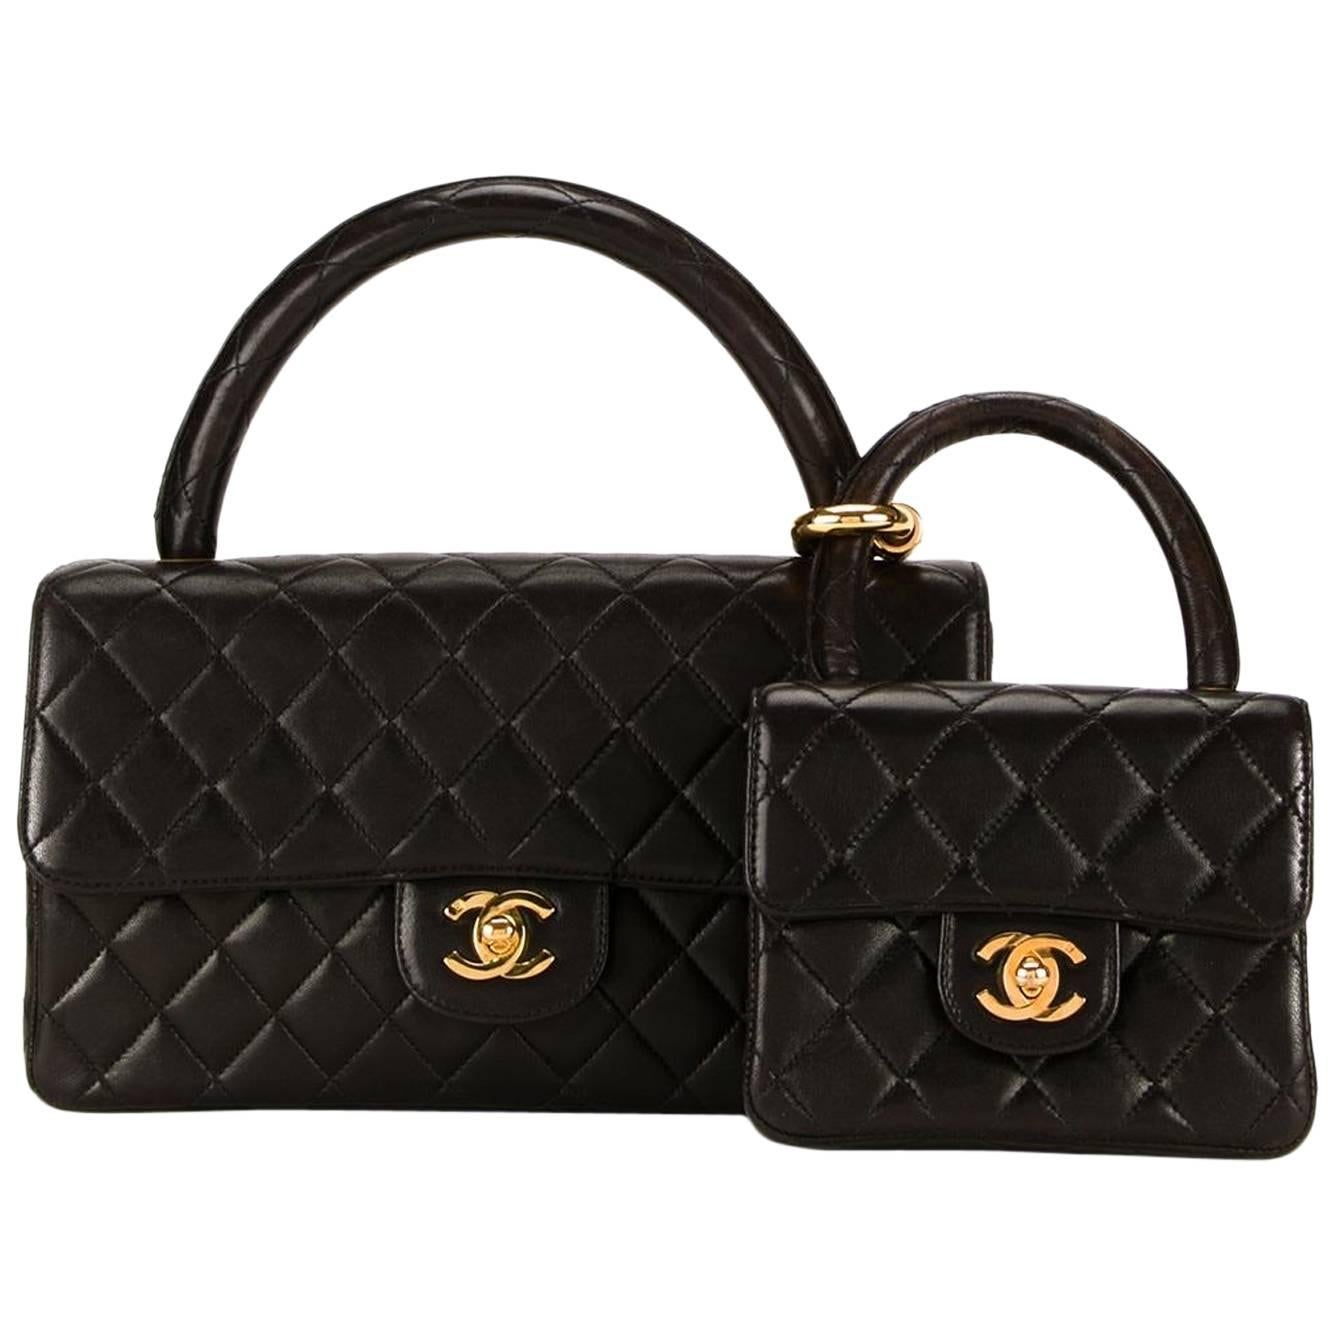 Chanel Black Lamb Kelly Style Satchel Small Medium Flap Bags